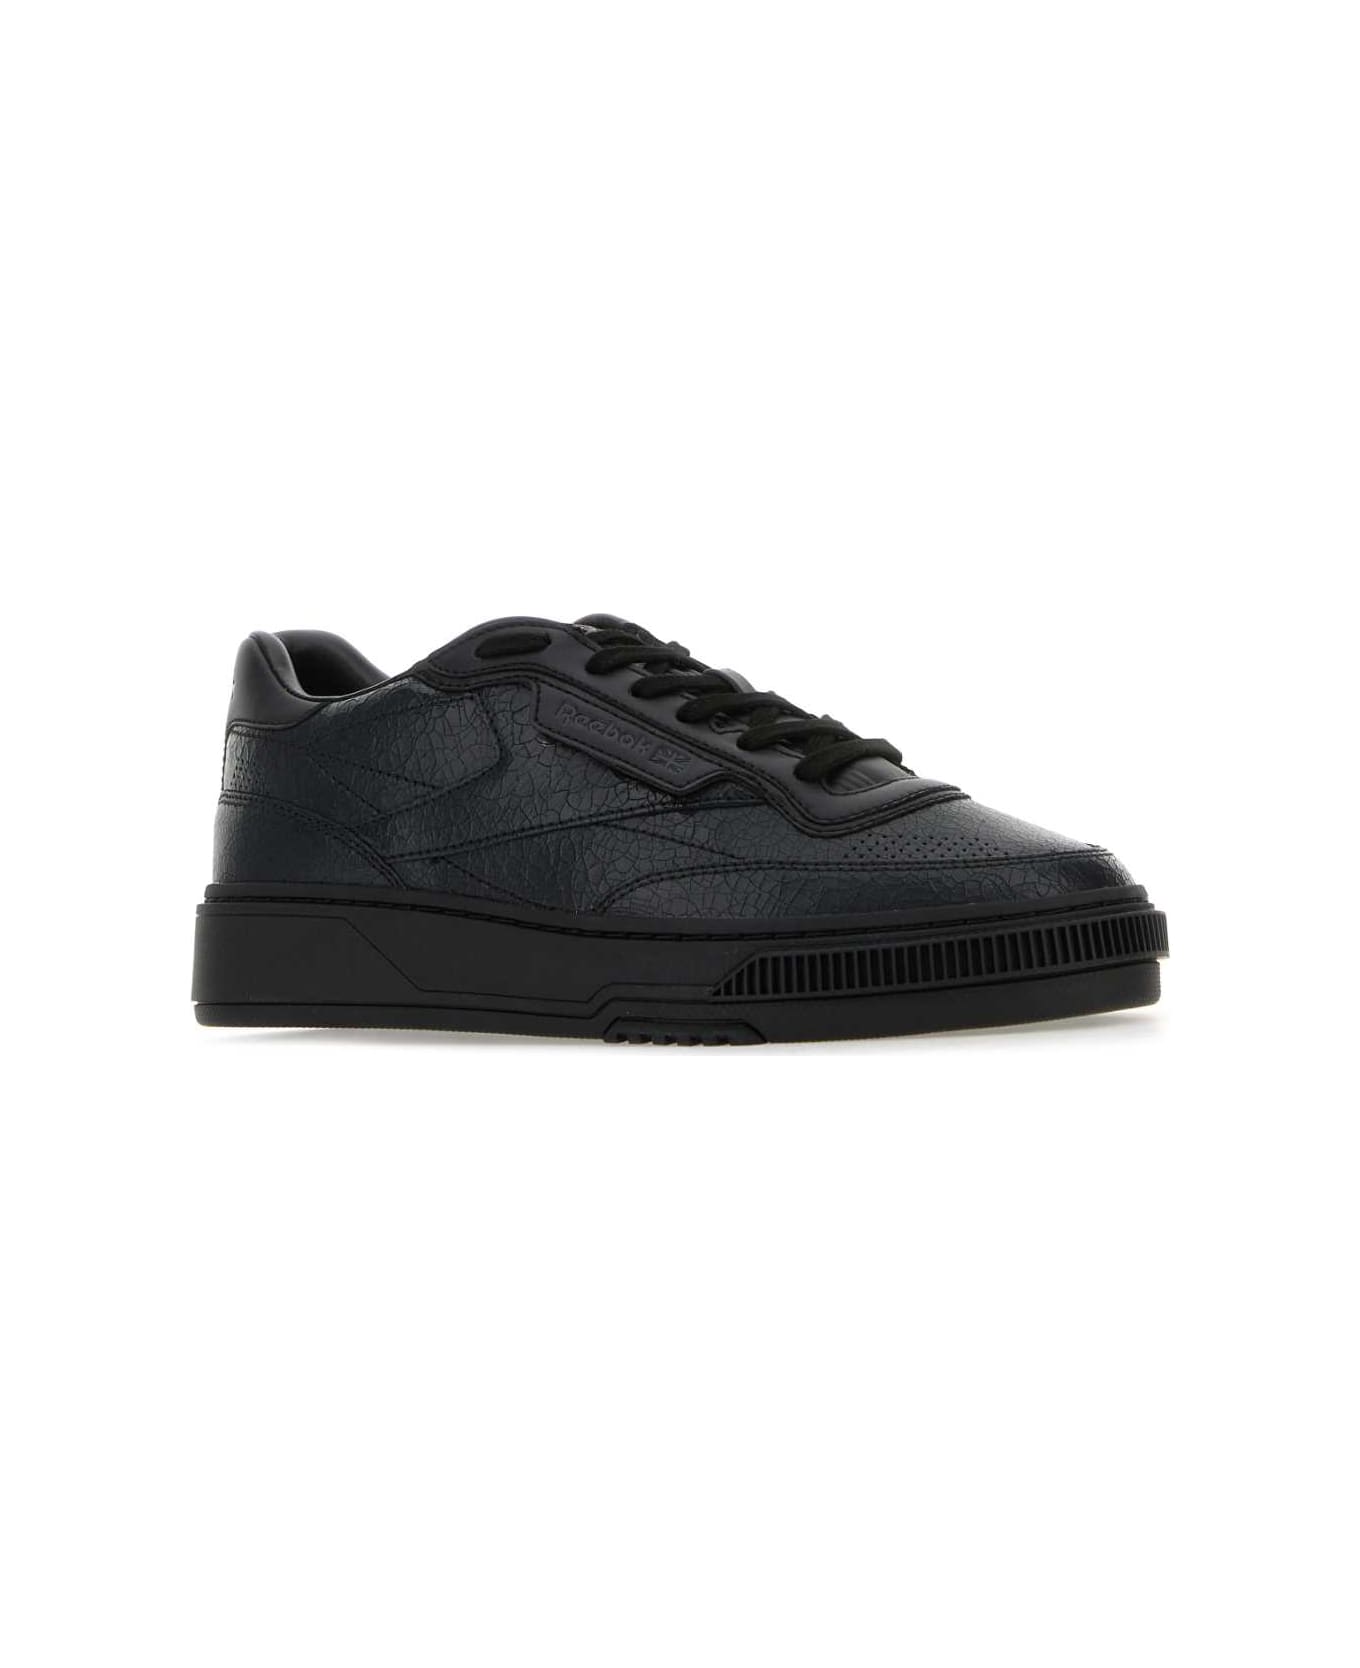 Reebok Black Leather Club C Ltd Sneakers - Black スニーカー